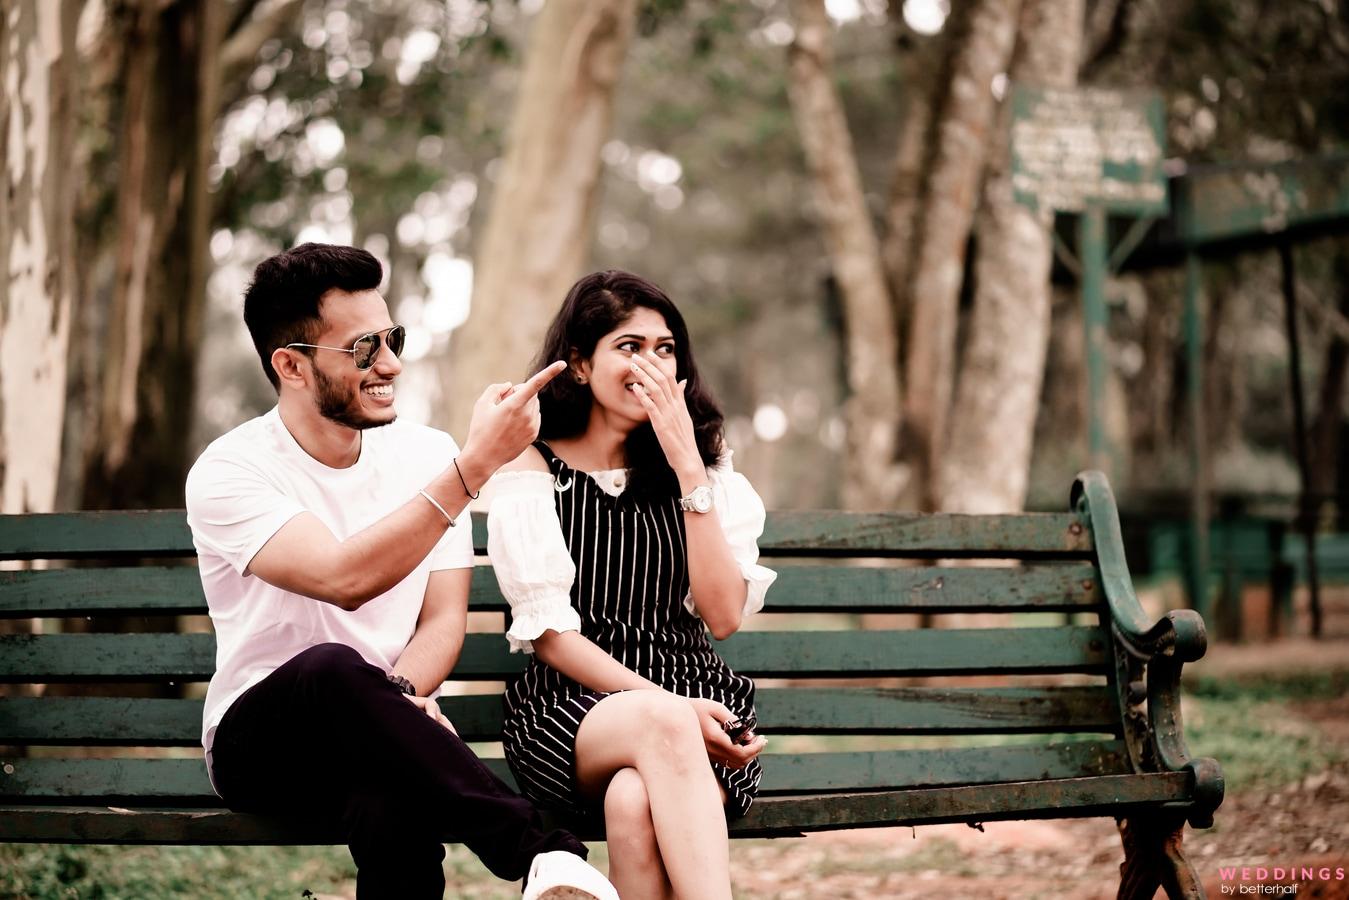 Premium Photo | Loving couple sitting on a bench